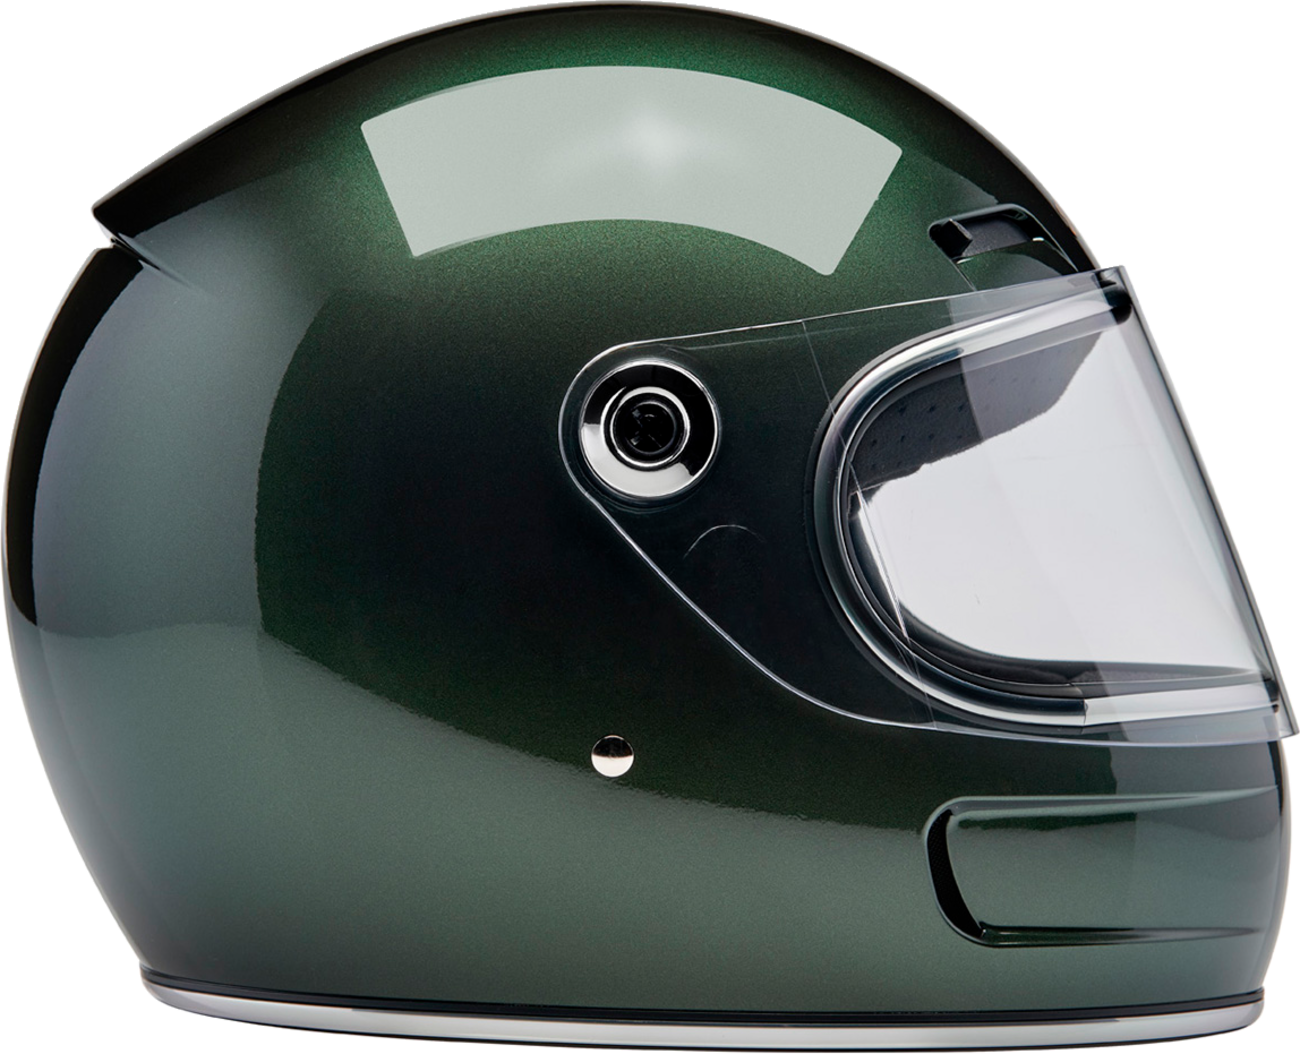 BILTWELL Gringo SV Helmet - Metallic Sierra Green - Large 1006-324-504